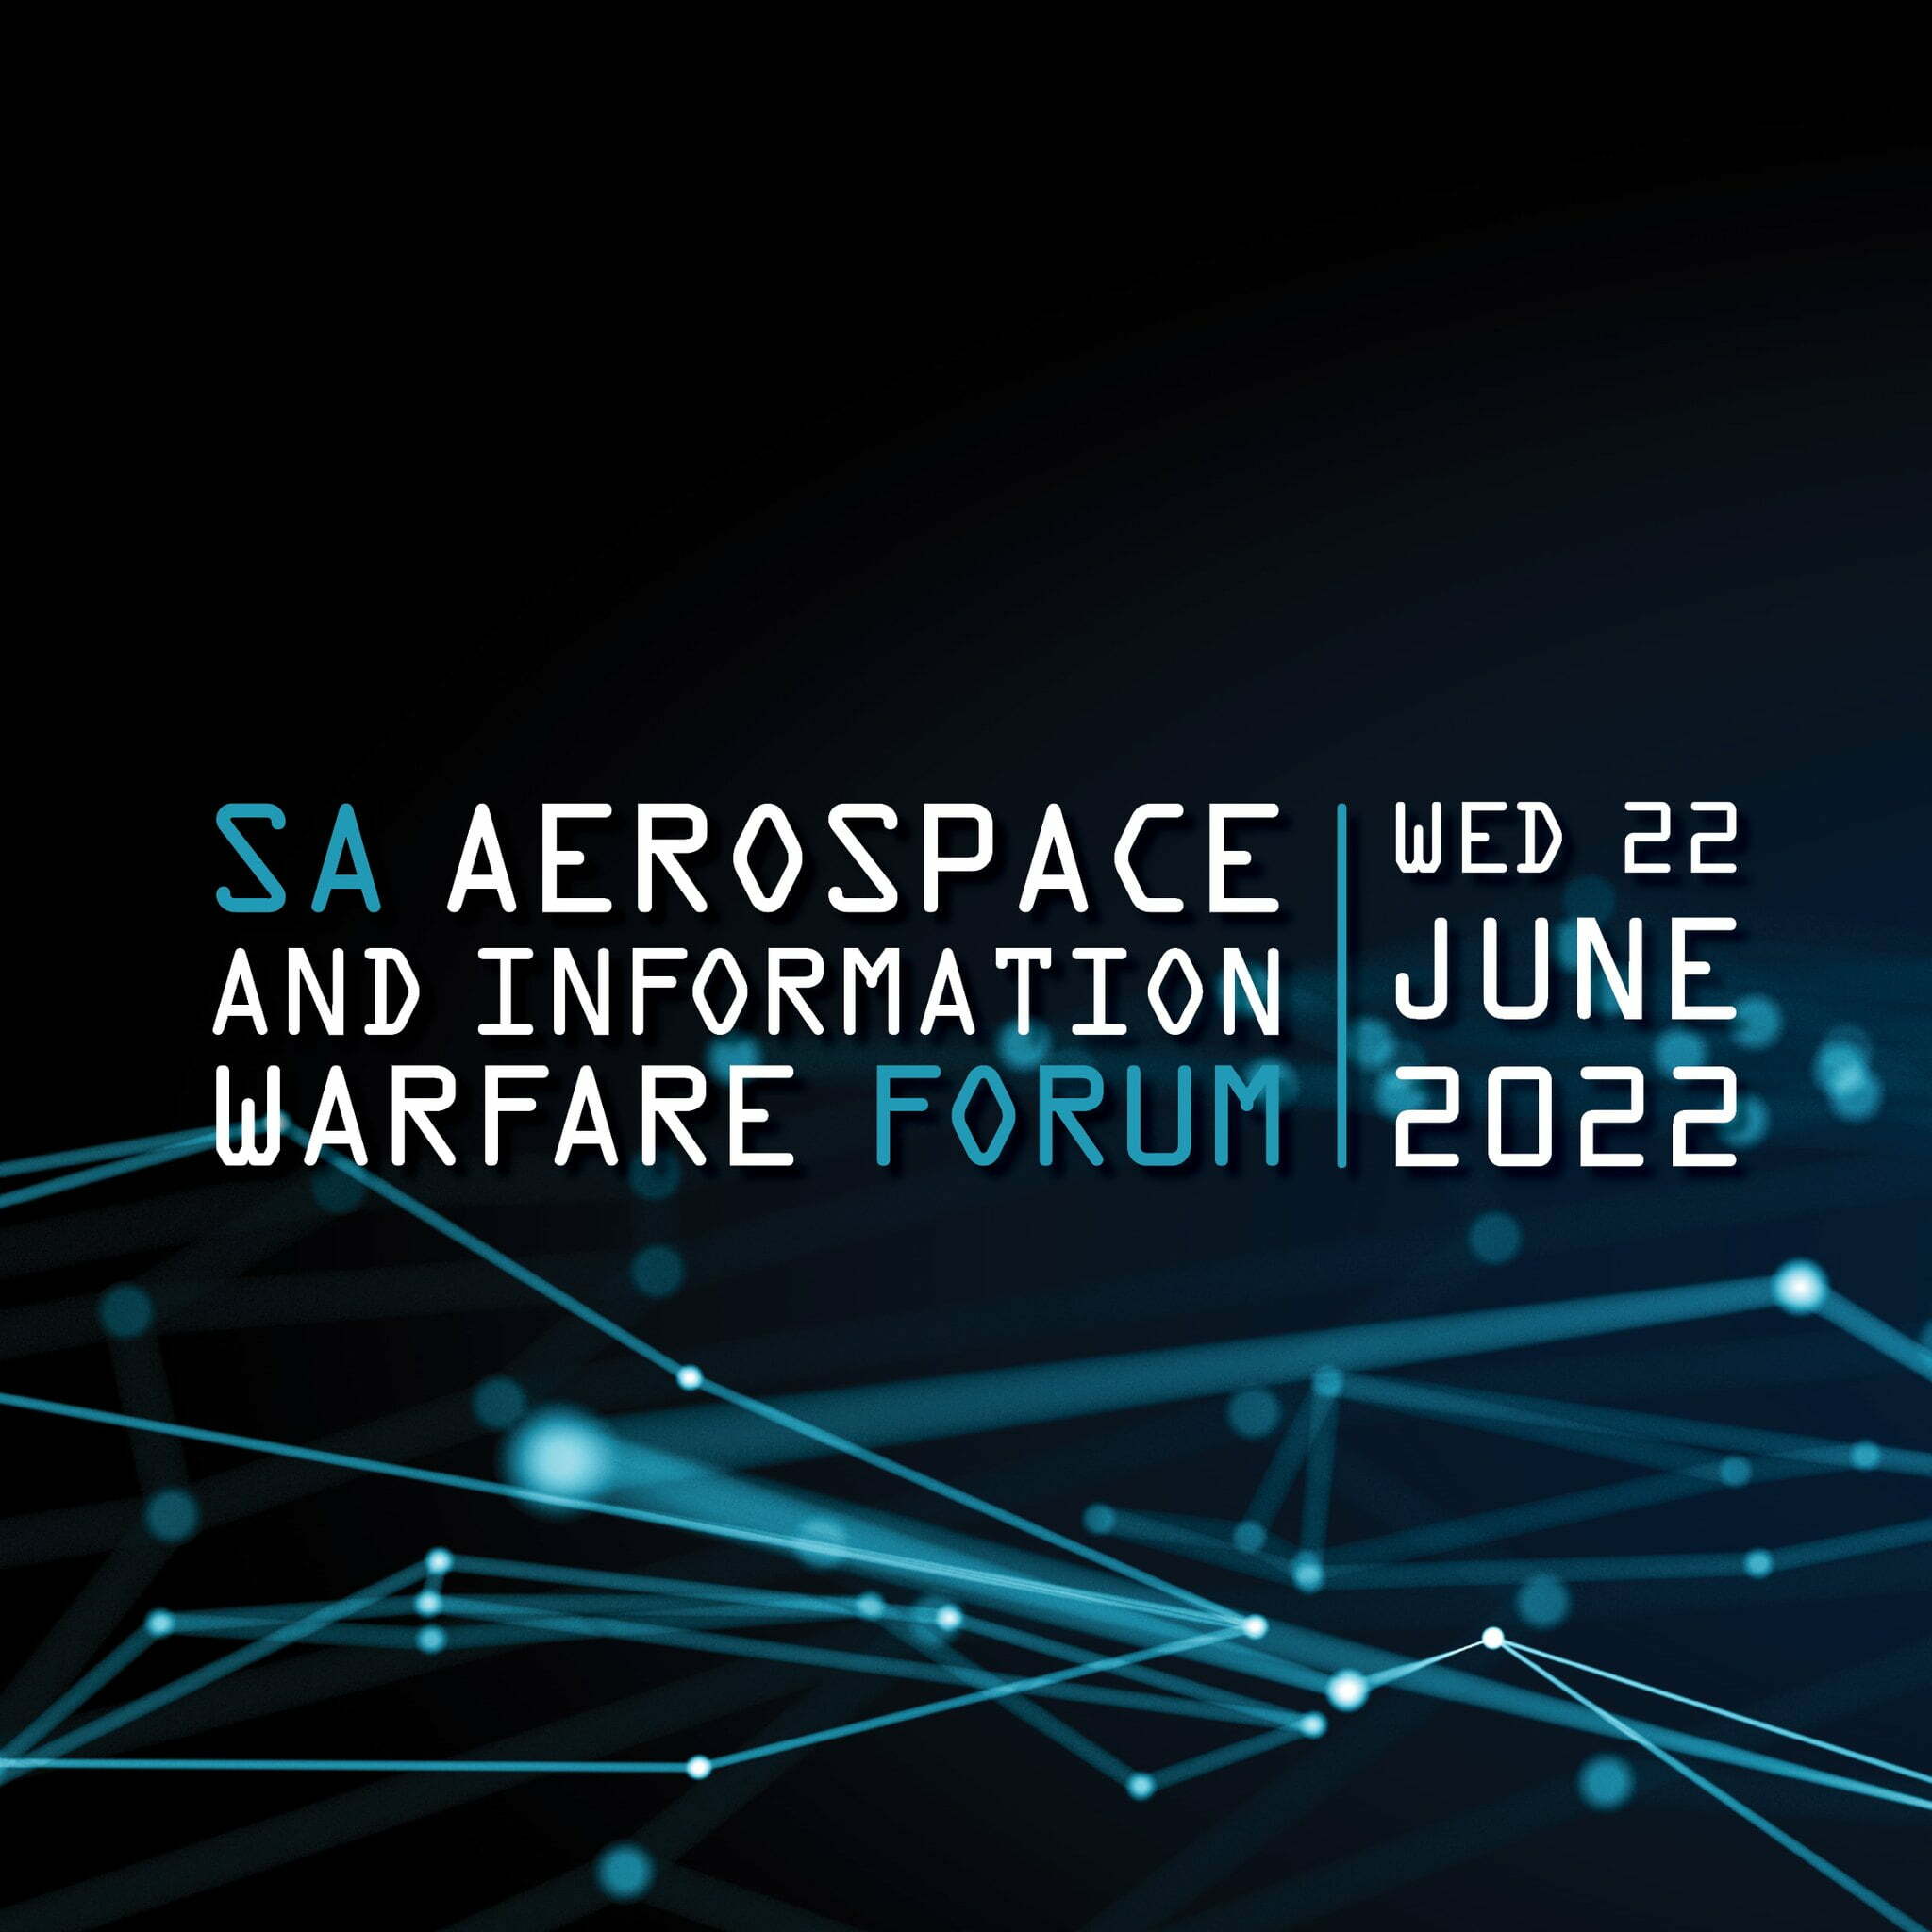 SA_Aerospace_Information Warfare_Forum